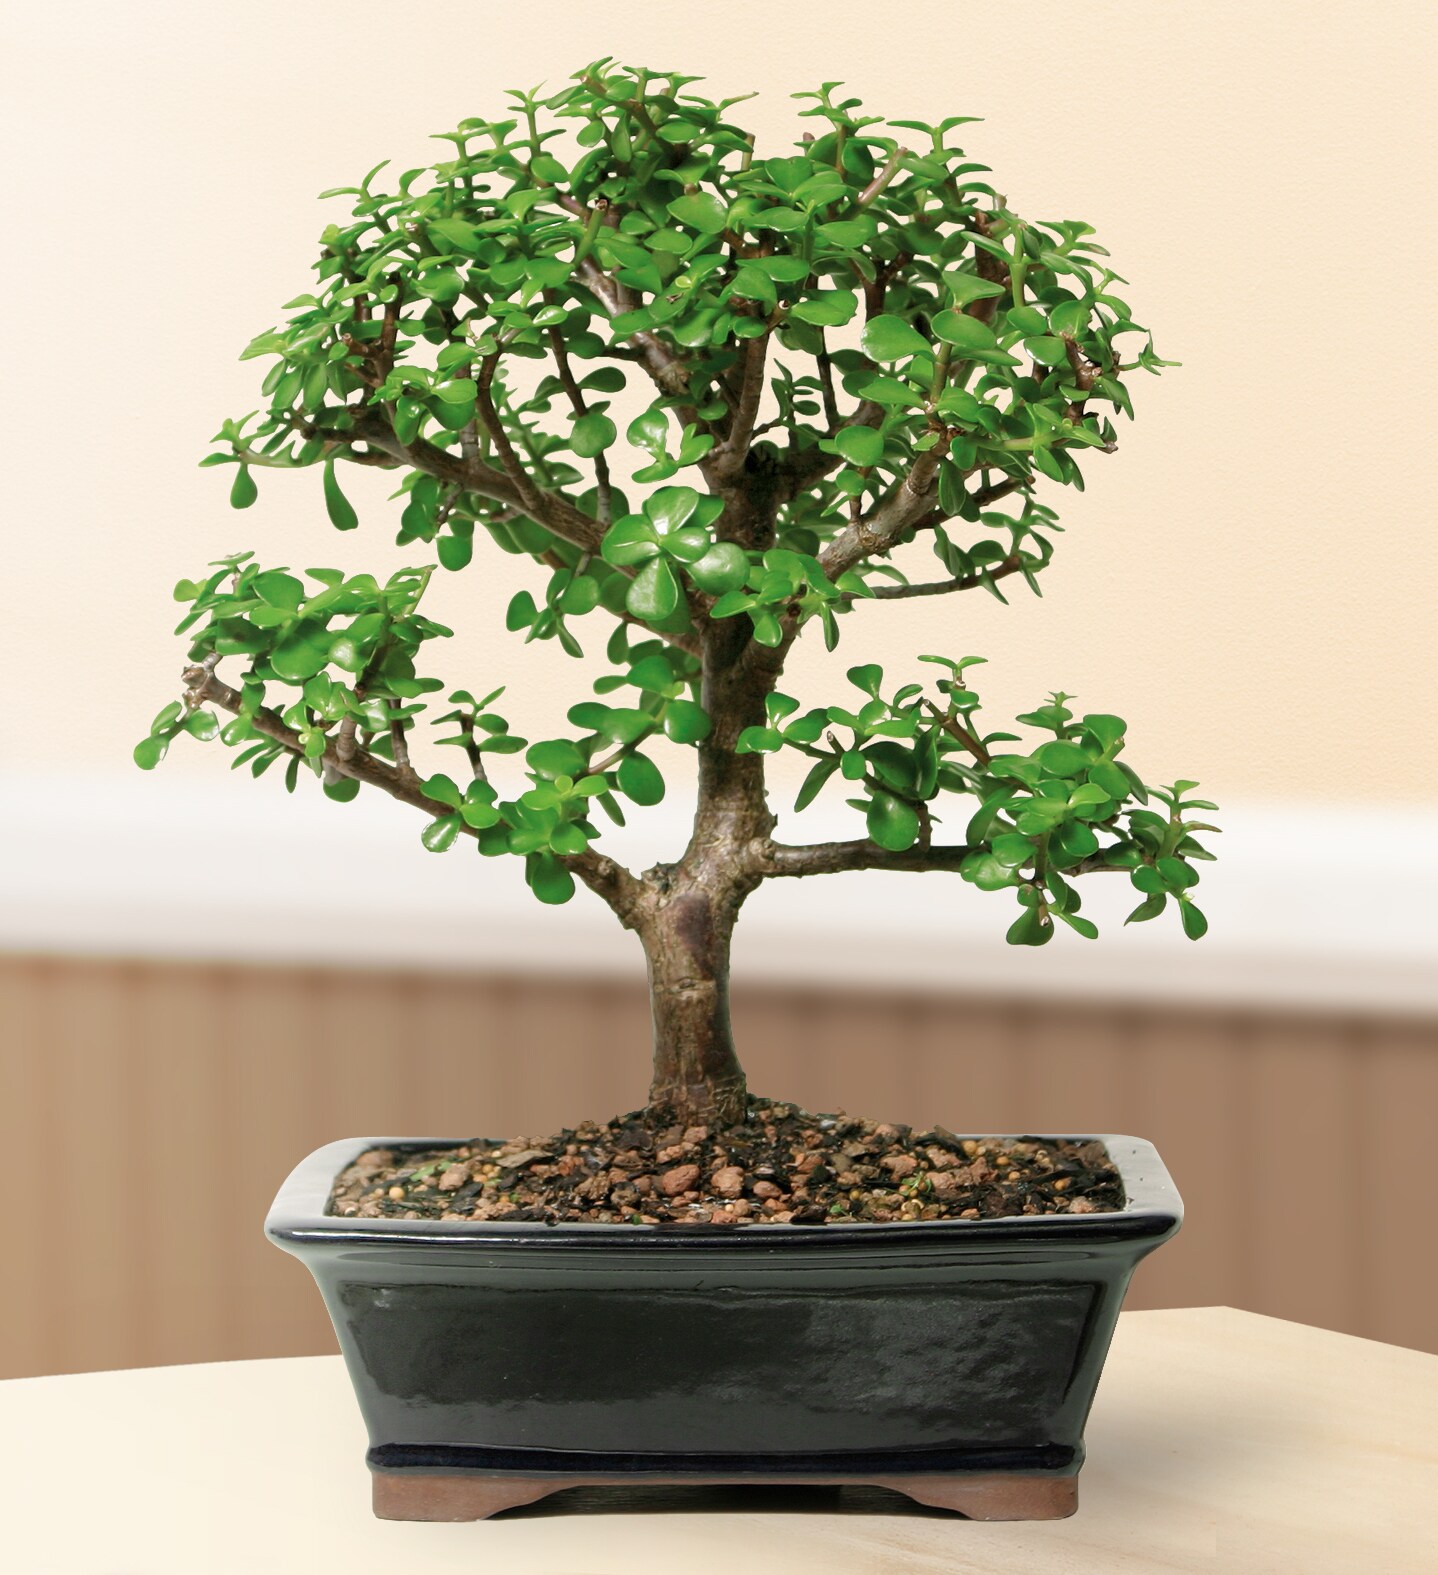 DIY Dwarf Jade Bonsai Tree Kit at